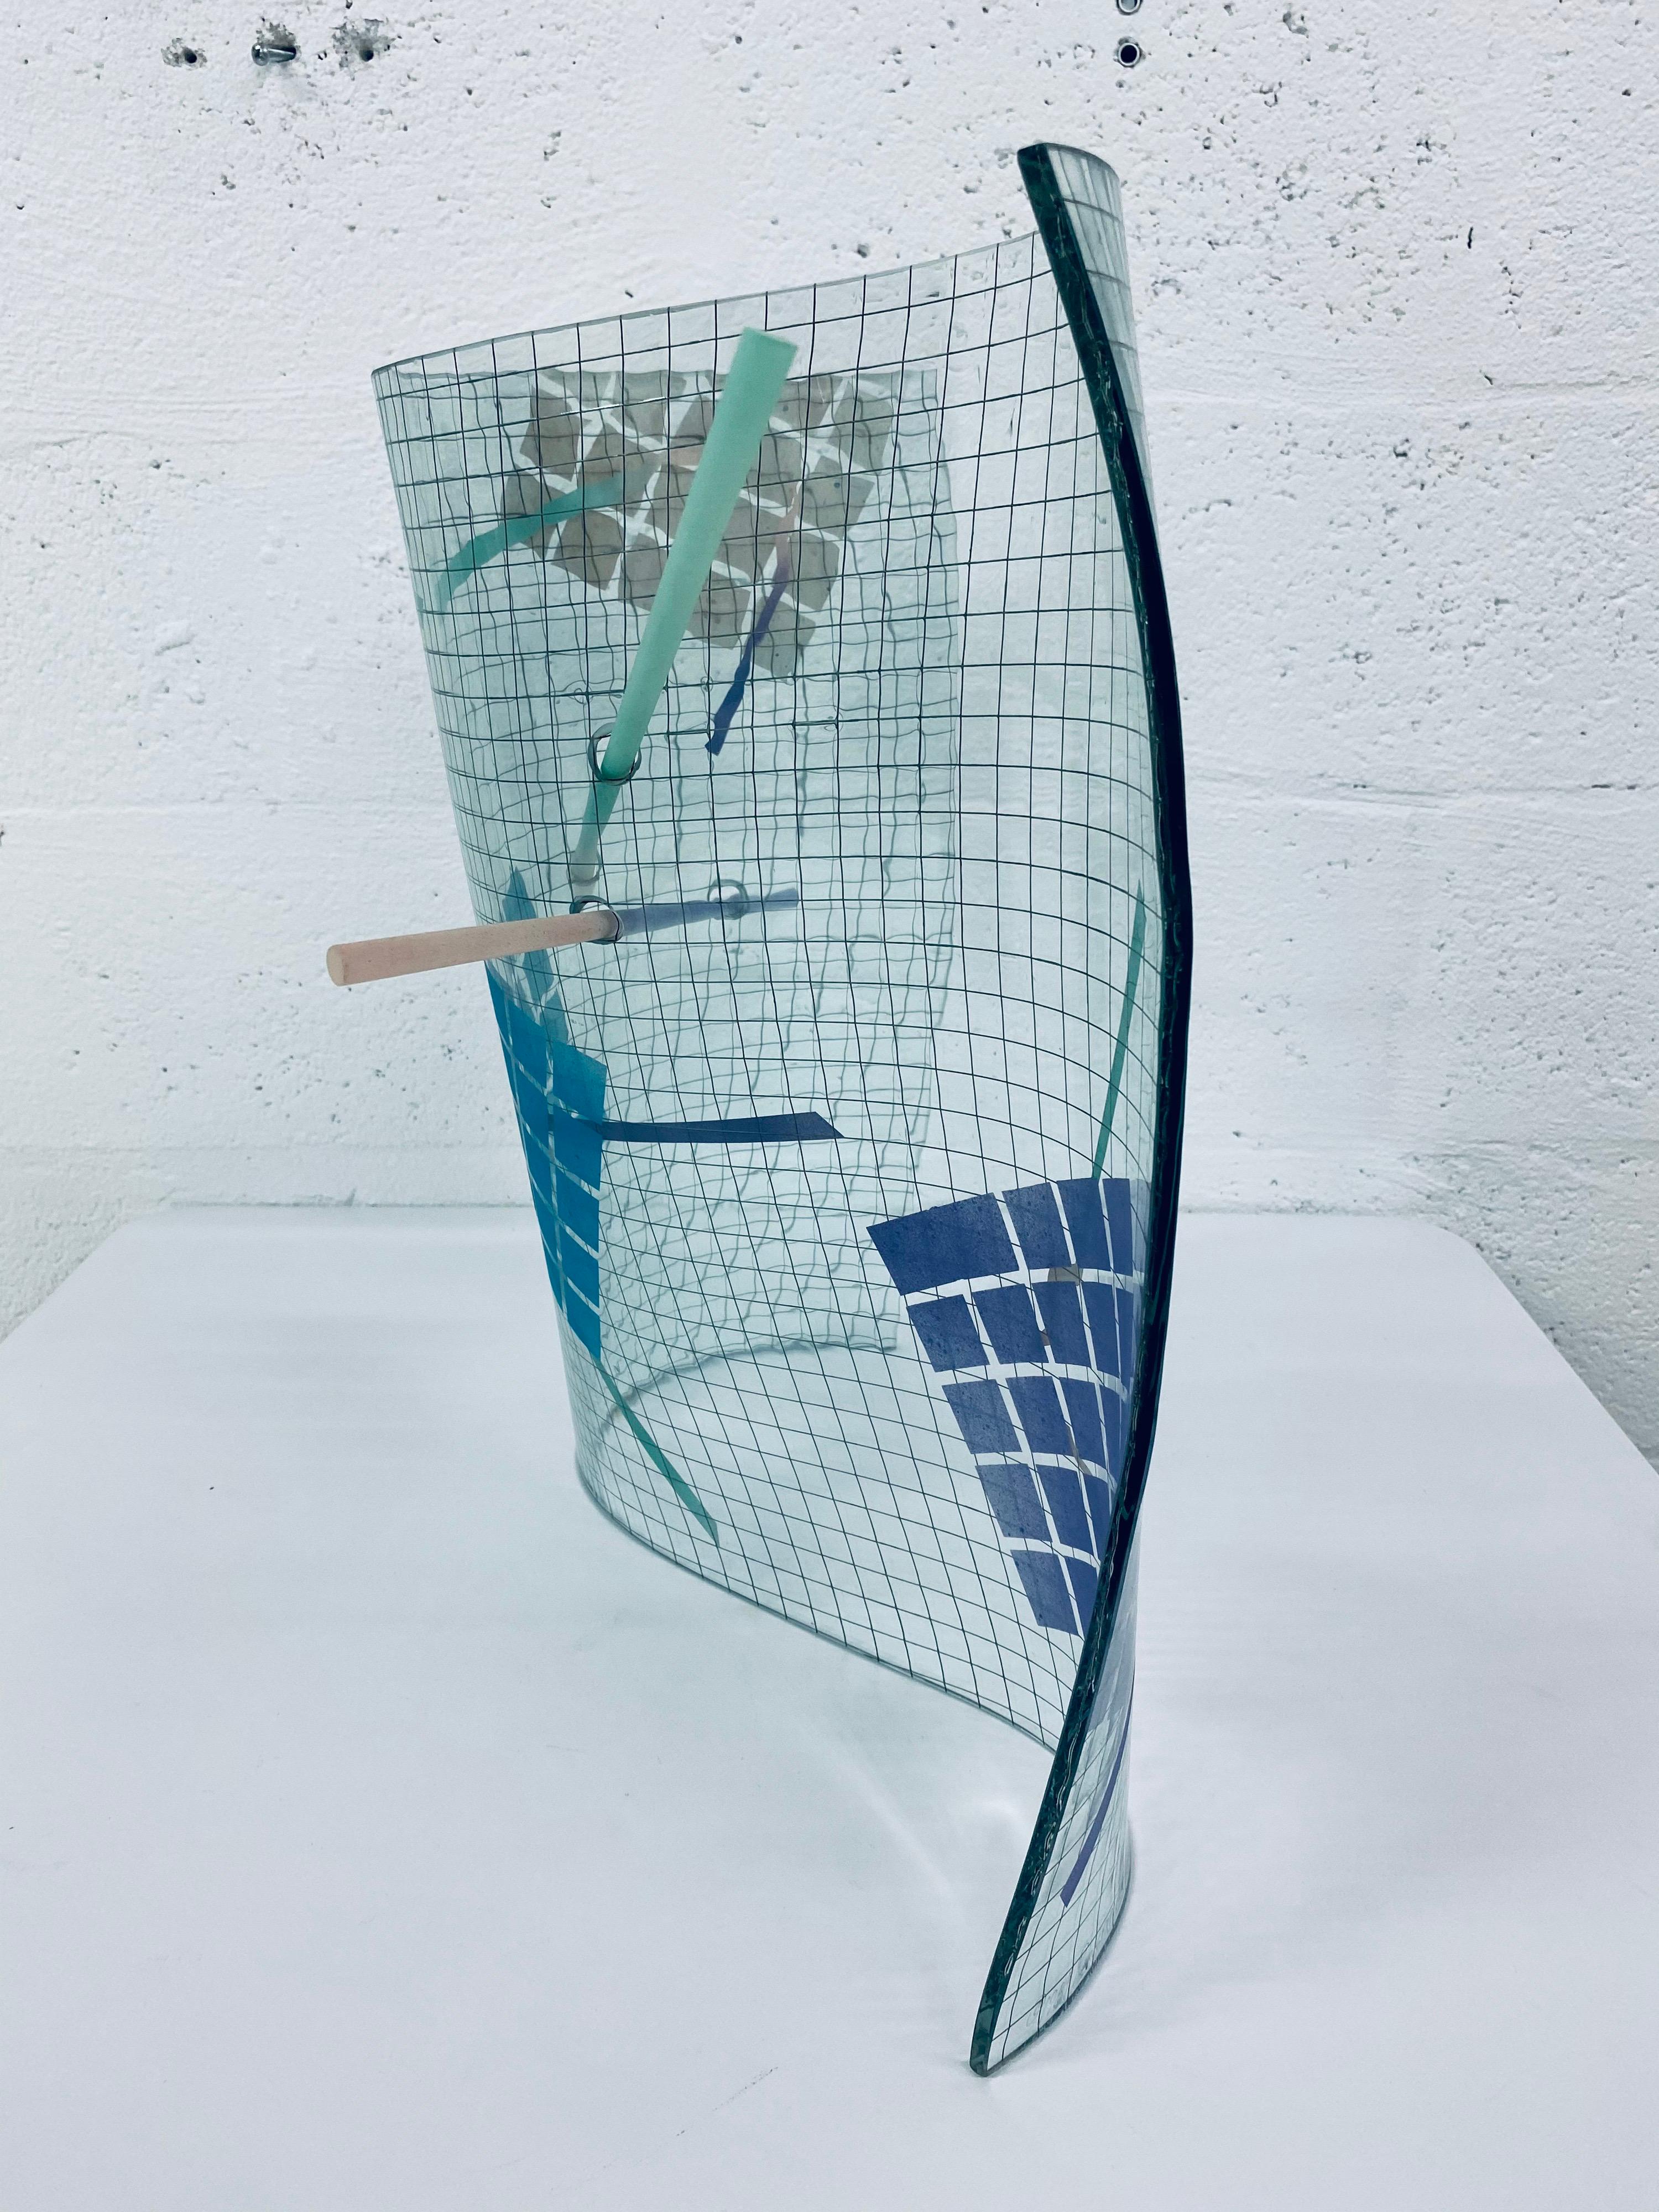 Postmodern Memphis Style Glass Sculpture by Runstadler Studios # 6/25, 1989 4